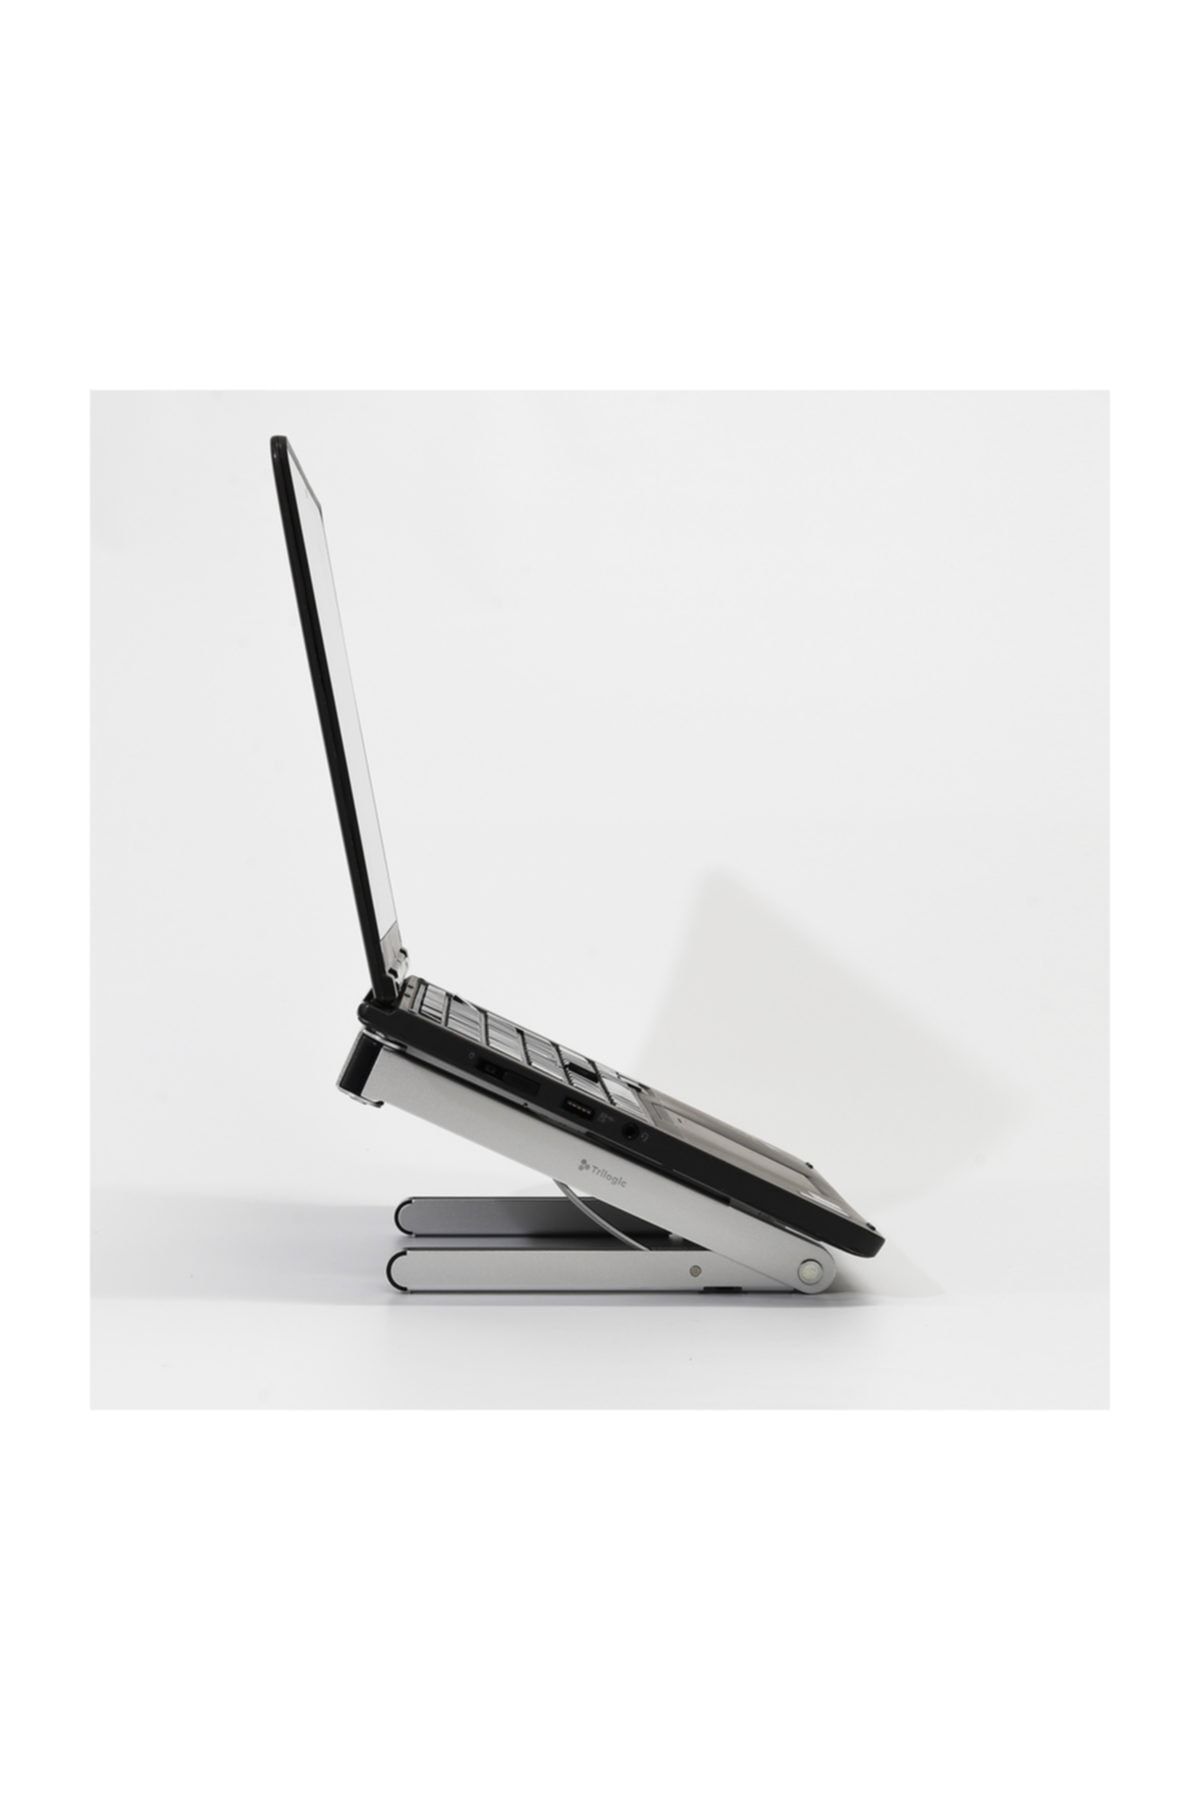 TRILOGIC Foldıt Ts201 Portatif Katlanabilir Alüminyum Laptop Macbook Stand